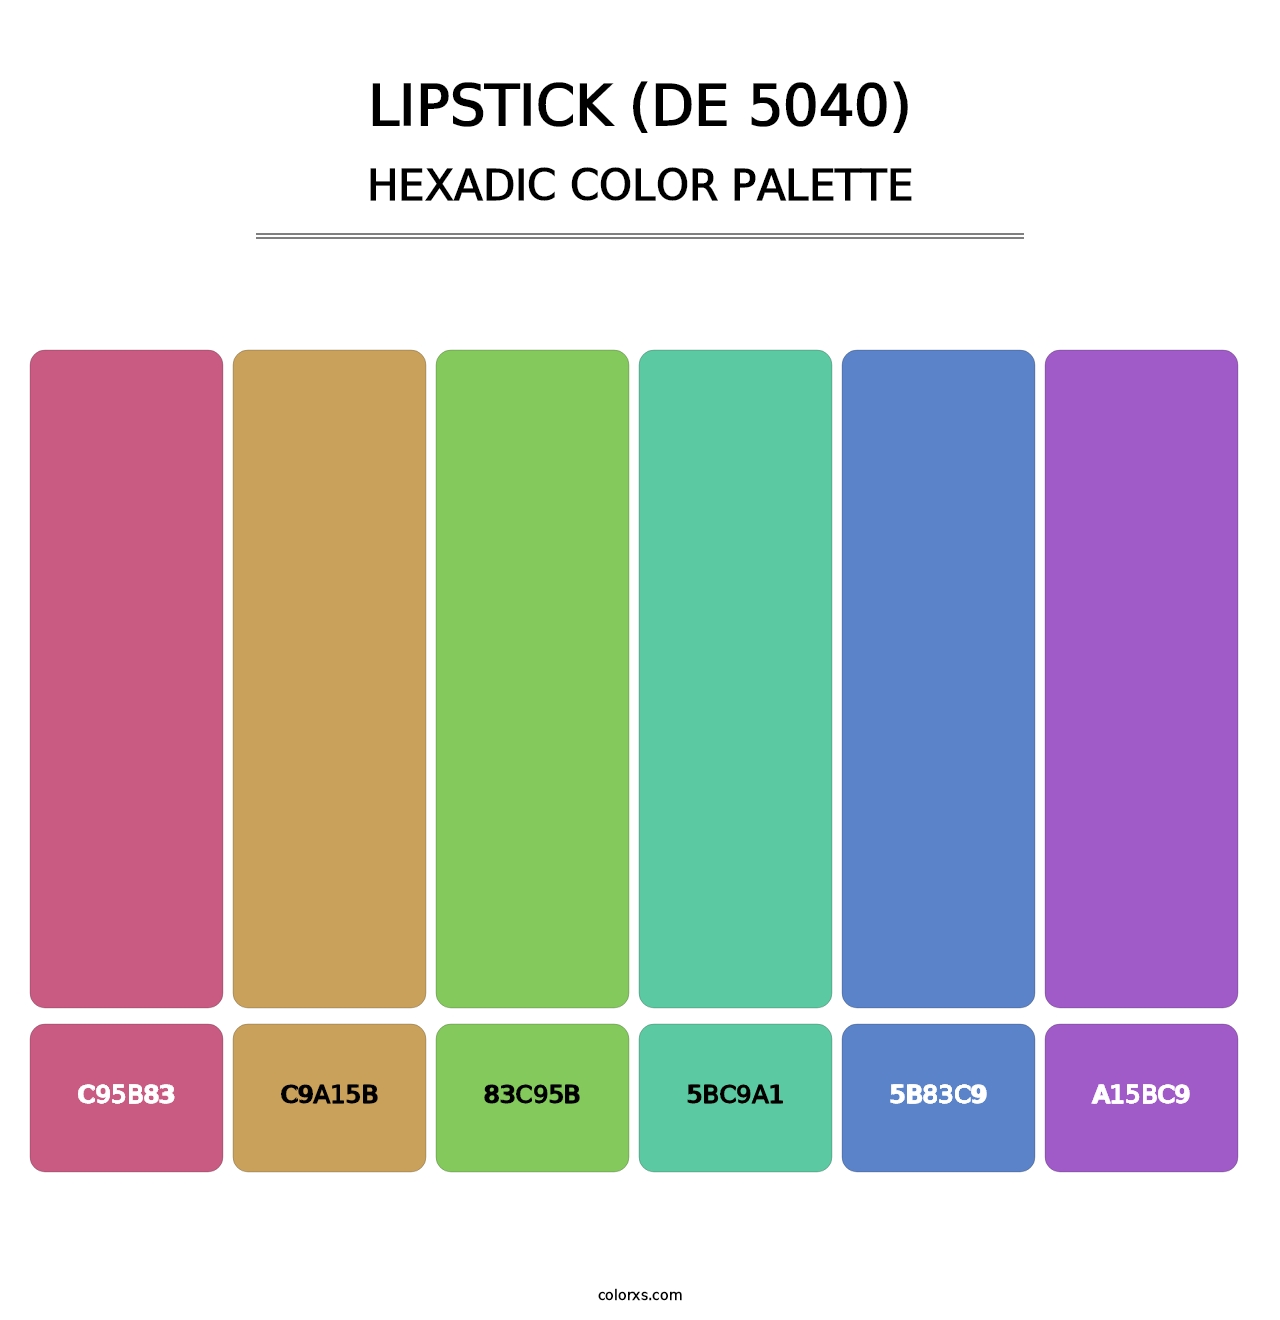 Lipstick (DE 5040) - Hexadic Color Palette